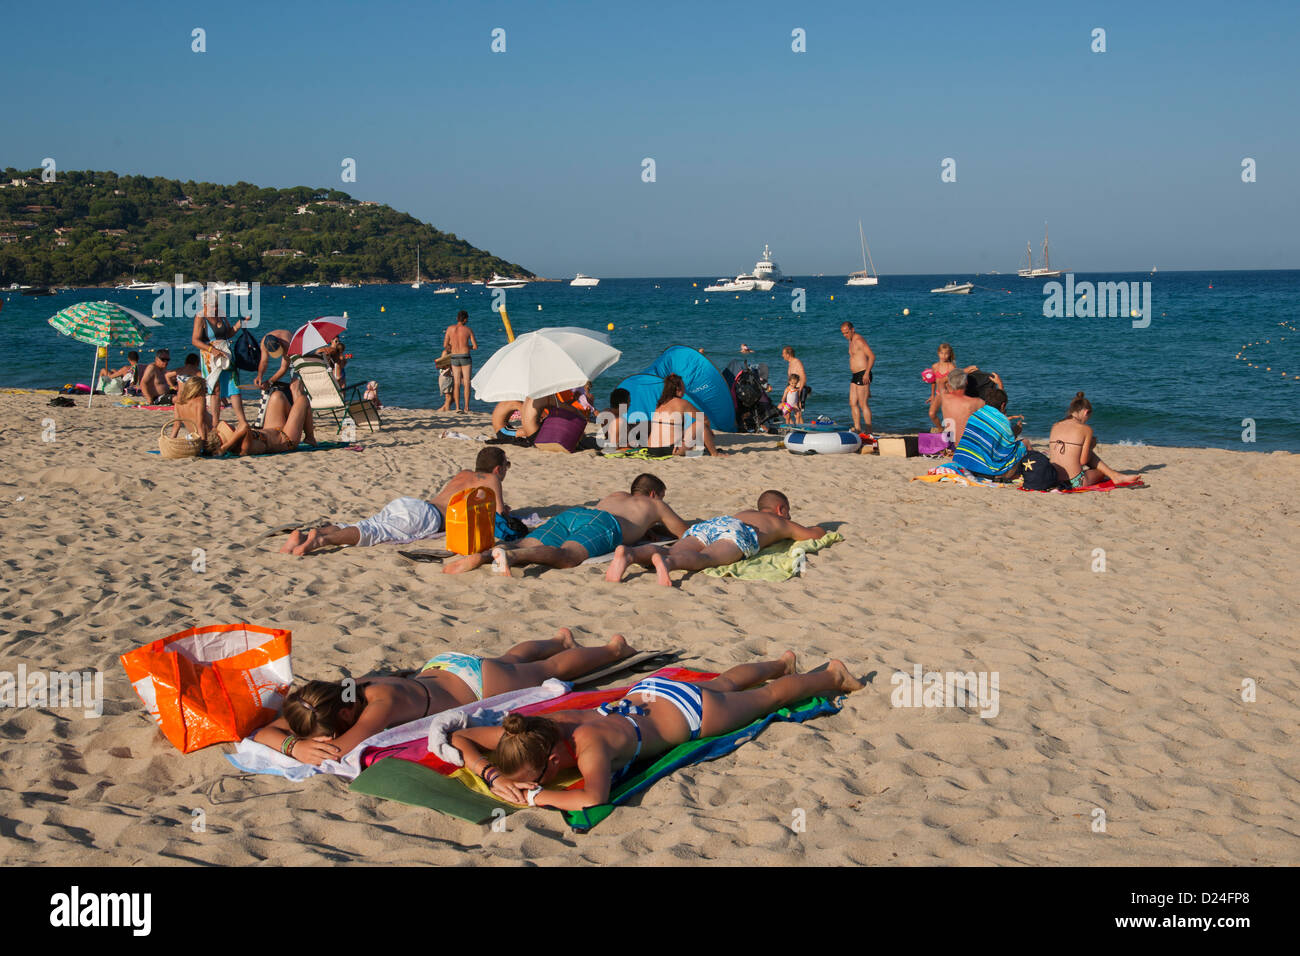 Sunbath Sun People Beach Tahiti Plage Tahiti Sea Sant Tropez St Tropez France Europe Stock Photo Alamy